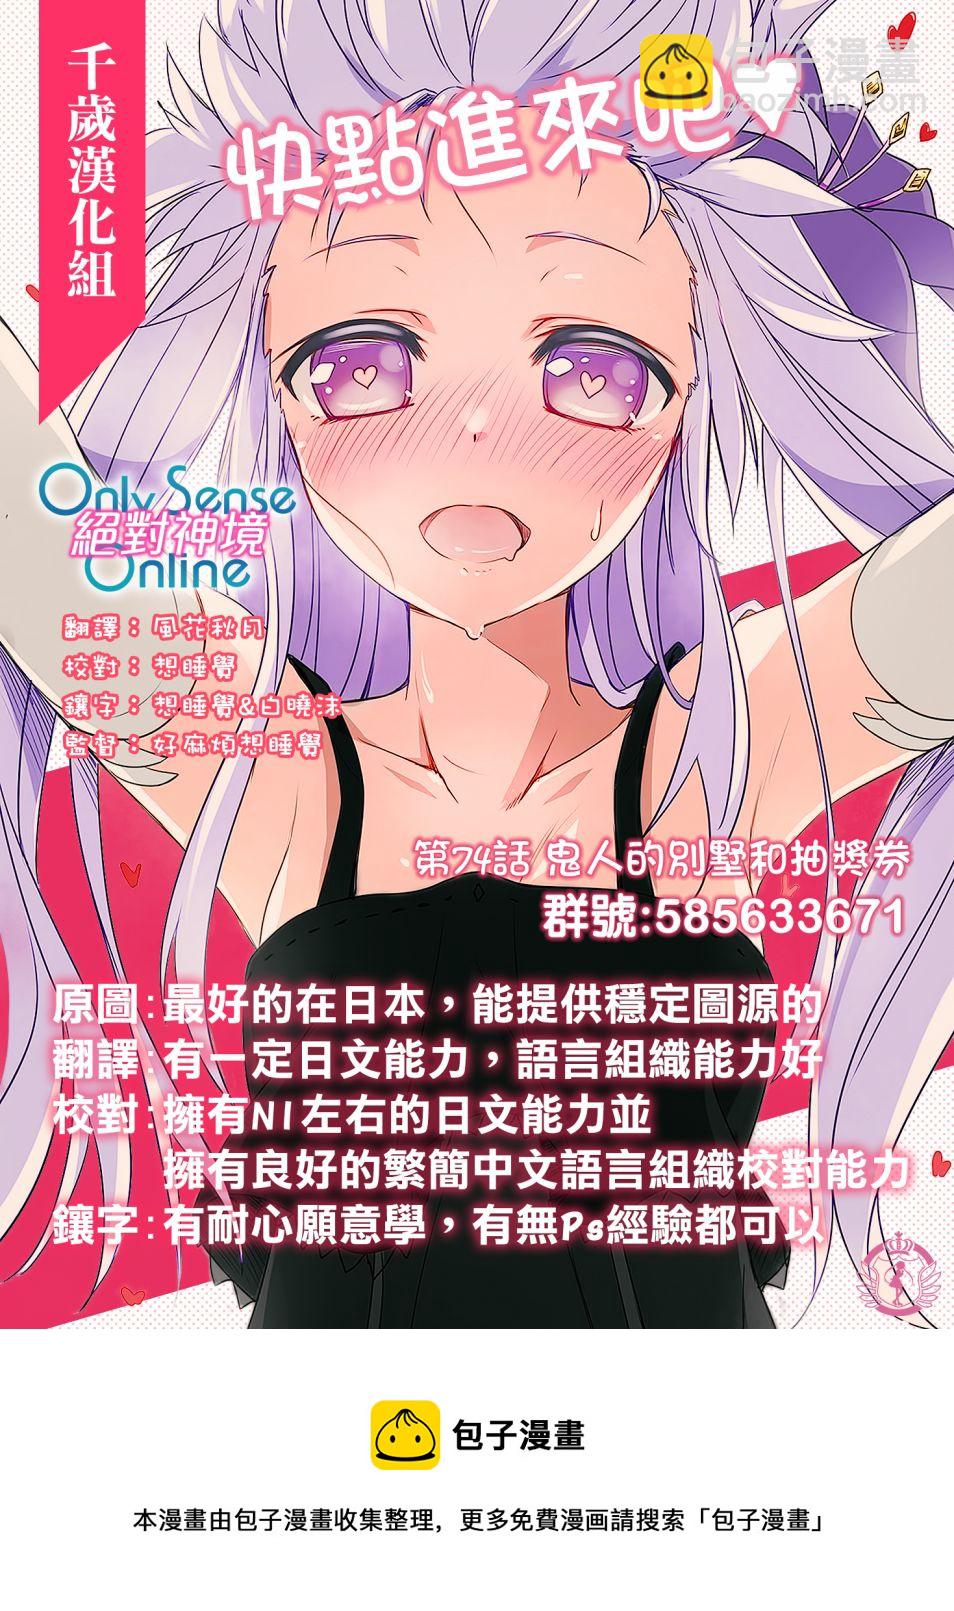 Only Sense Online - 第74話 - 3